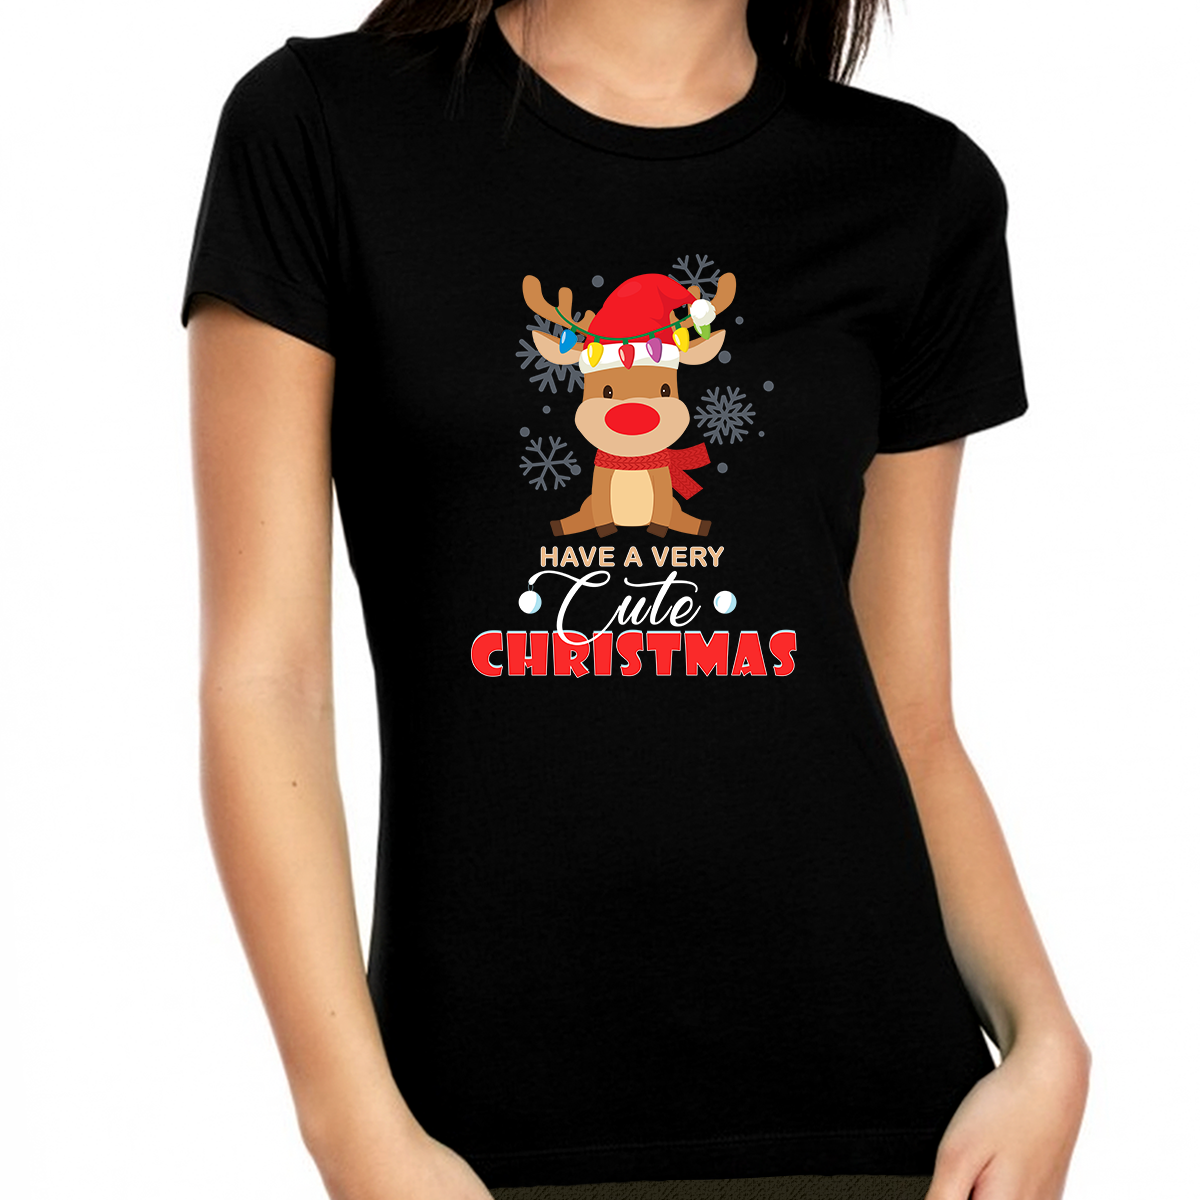 Cute Christmas Shirts for Women Christmas Outfits Cute Reindeer Christmas Pajamas Shirt